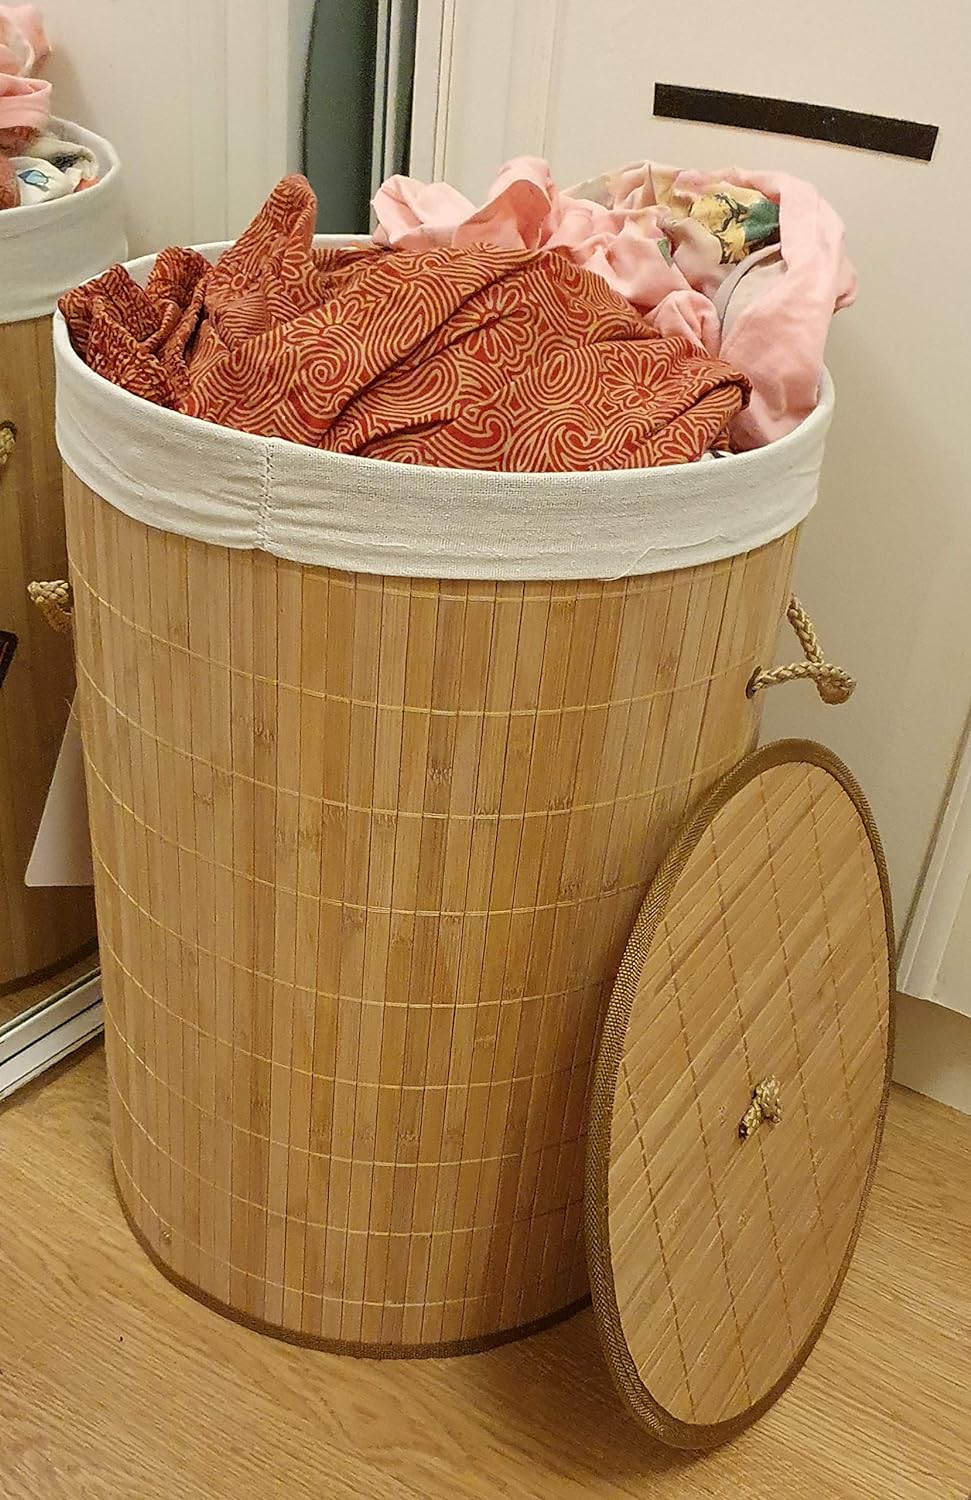 ADEPTNA Eco Friendly Round Bamboo wooden Folding Laundry Basket